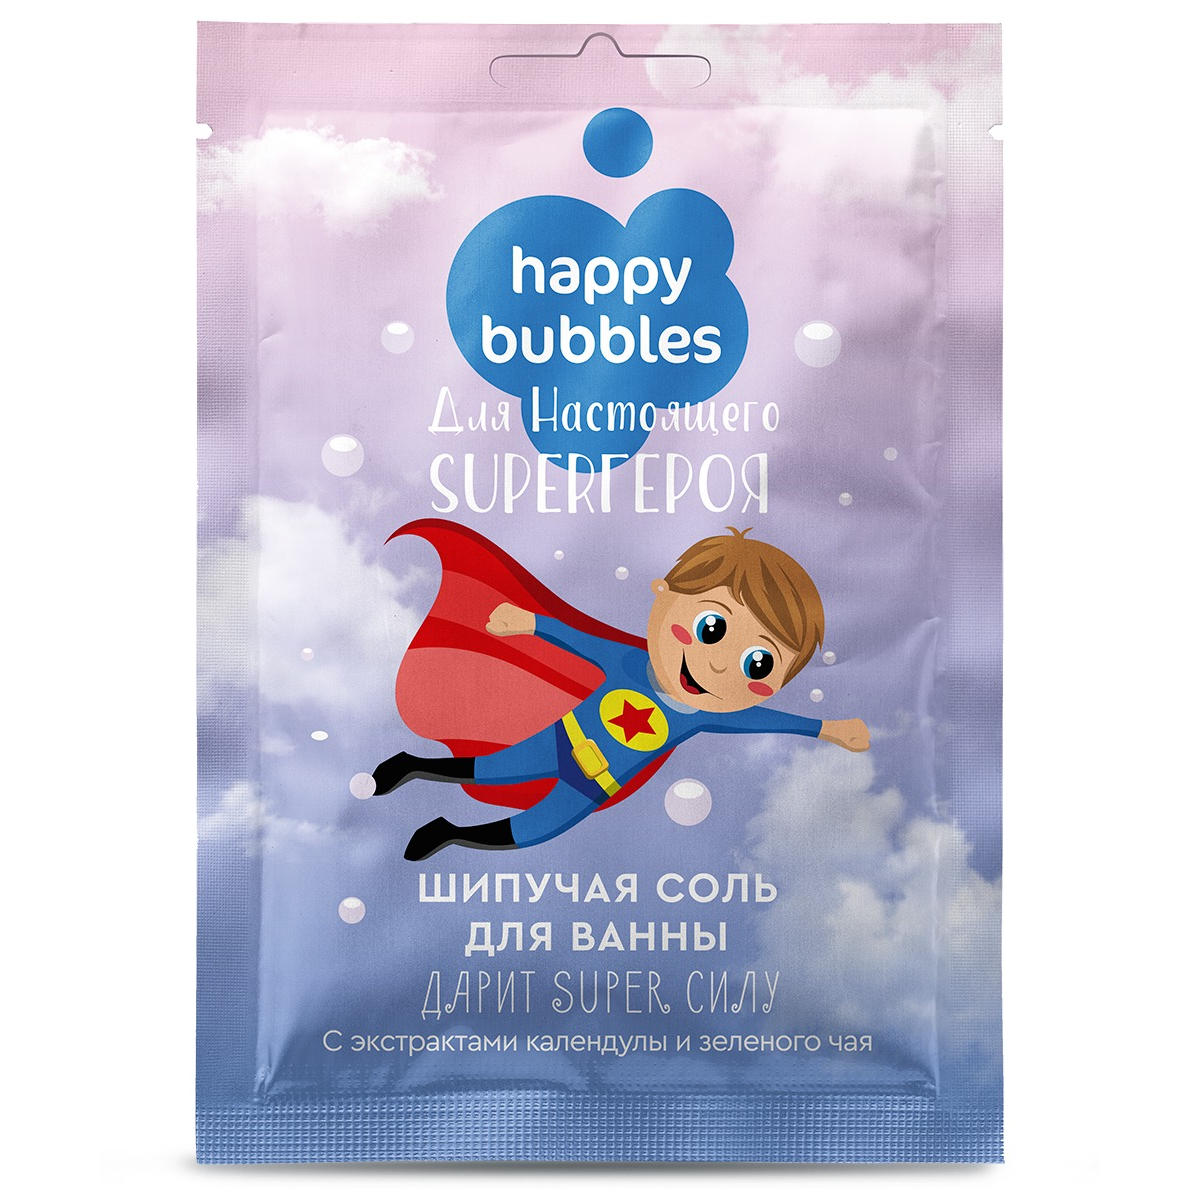 Соль для ванны Happy bubbles для настоя Super героя 100г соль гималайская для ванны 300г